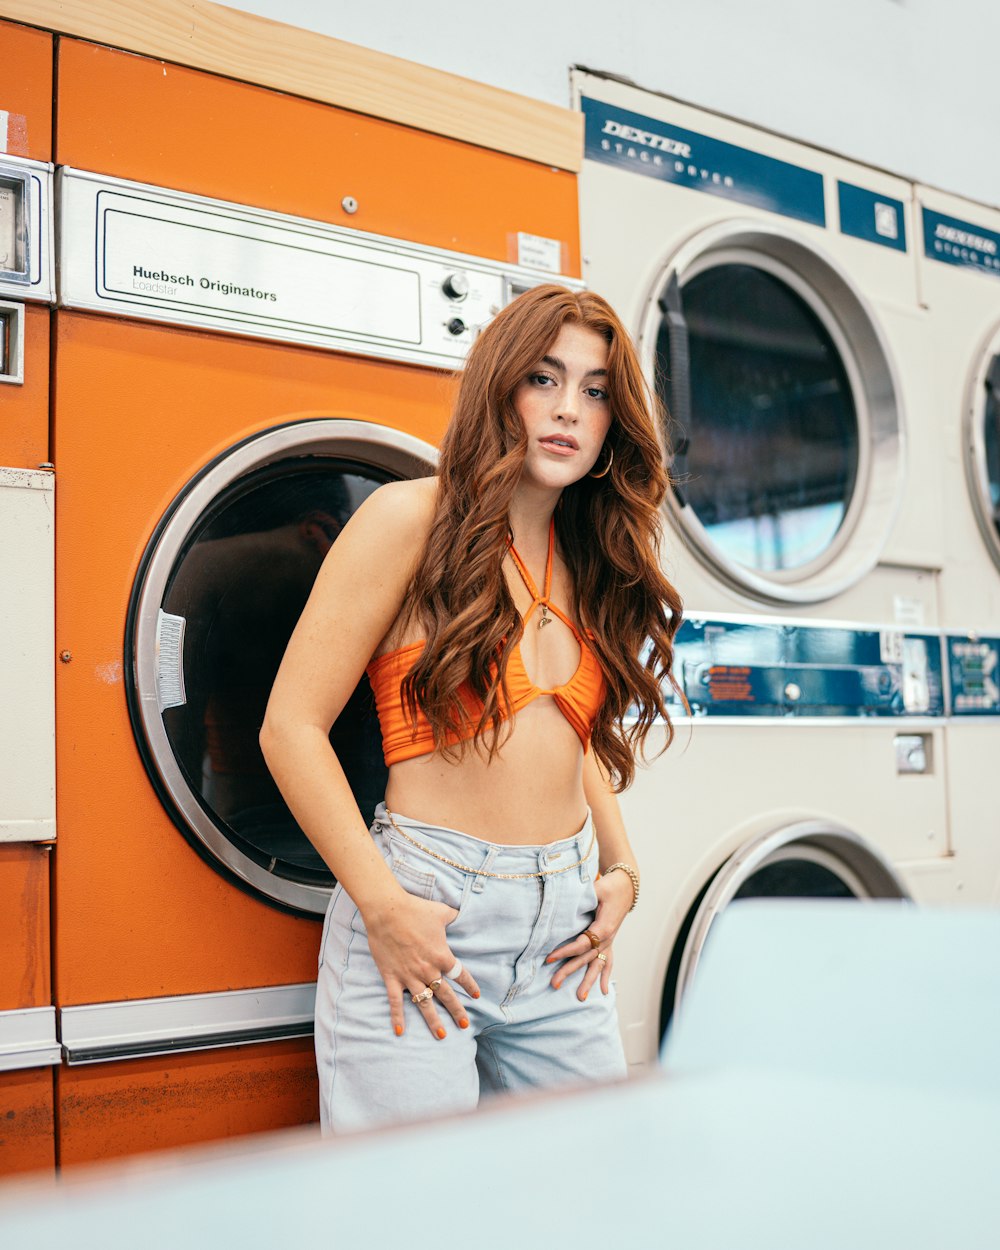 a woman standing next to a washing machine